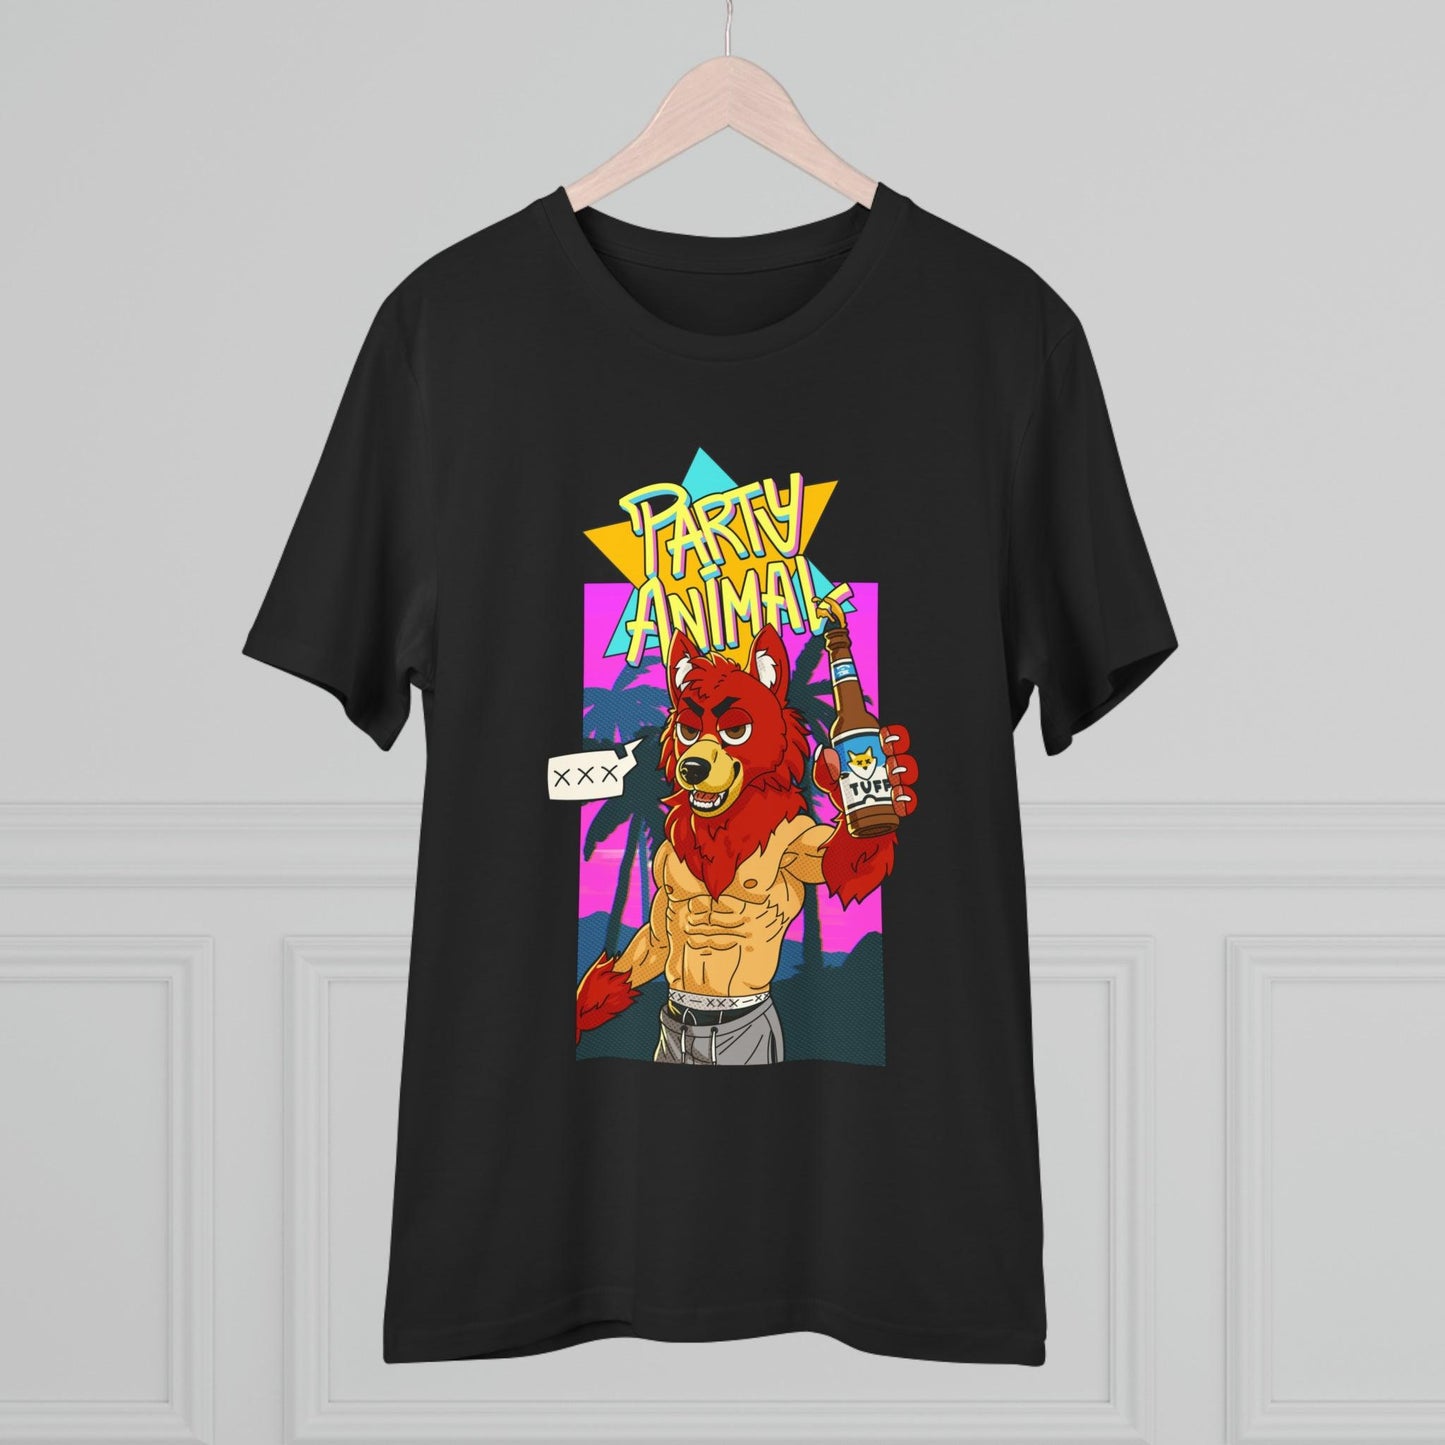 Party Animal - Organic Creator T-shirt - Unisex - Shaneinvasion